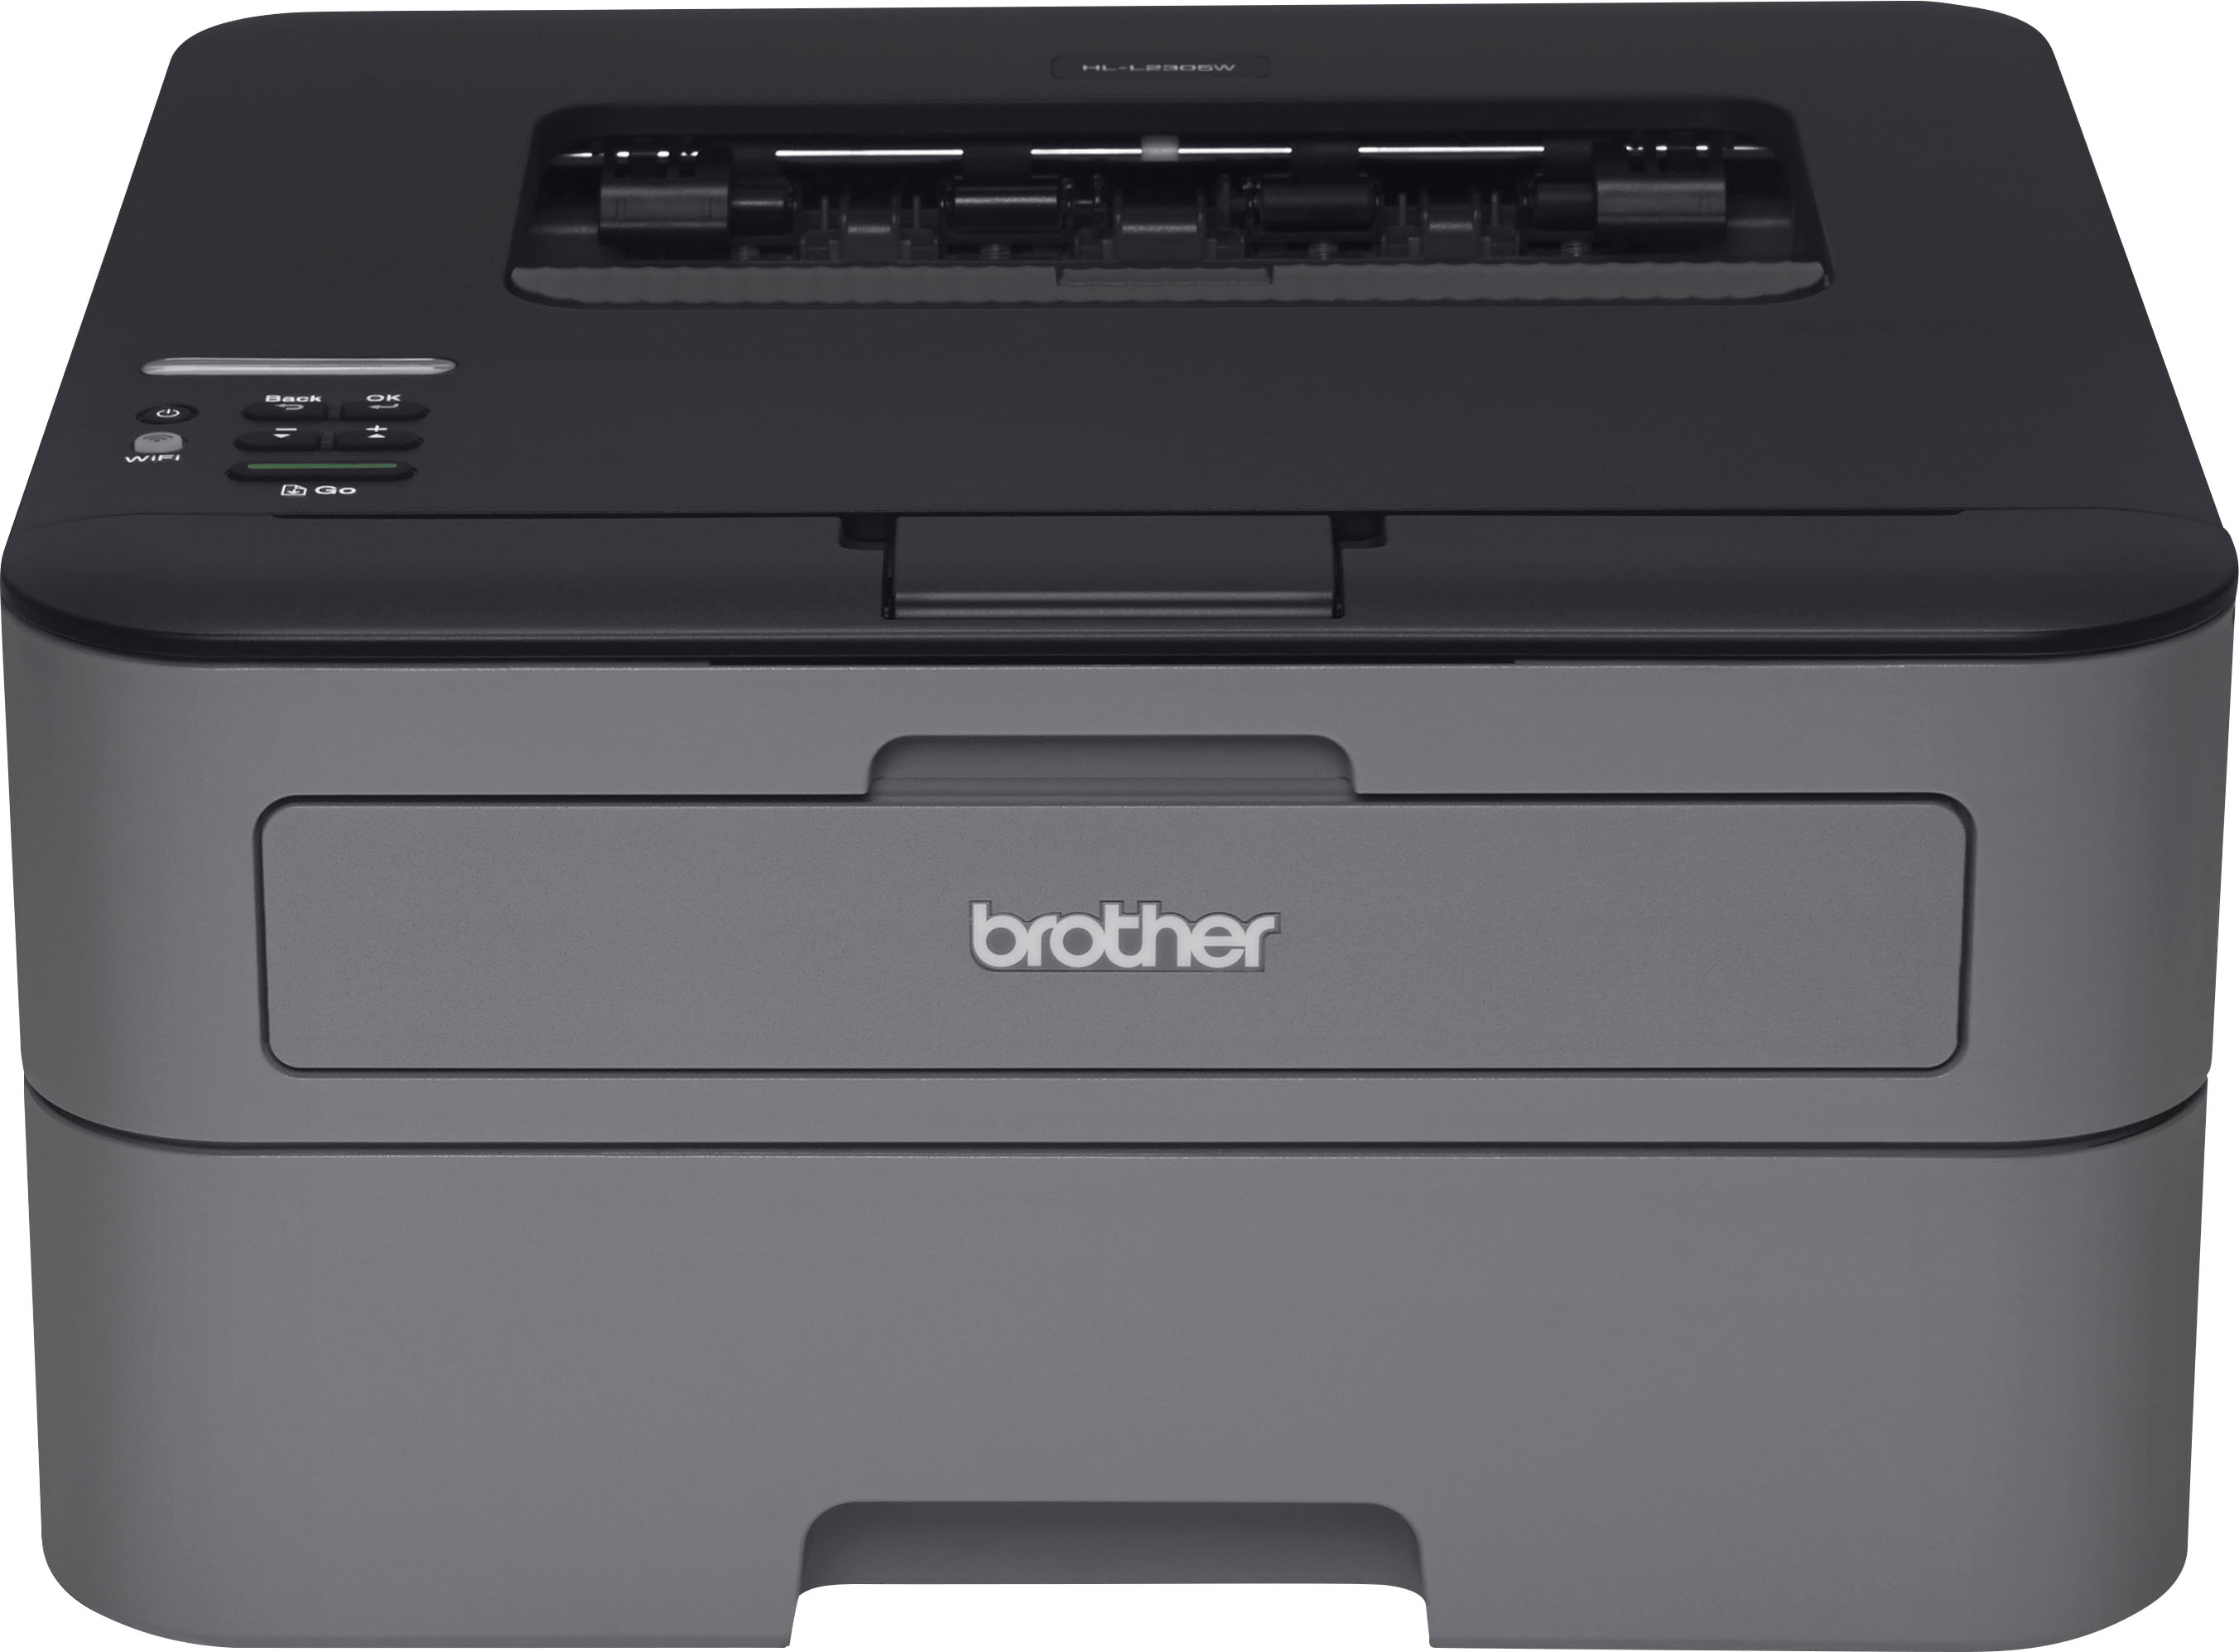 Brother HL-L2305W Wireless Black-and-White Laser Printer Gray HL-L2305W - Buy